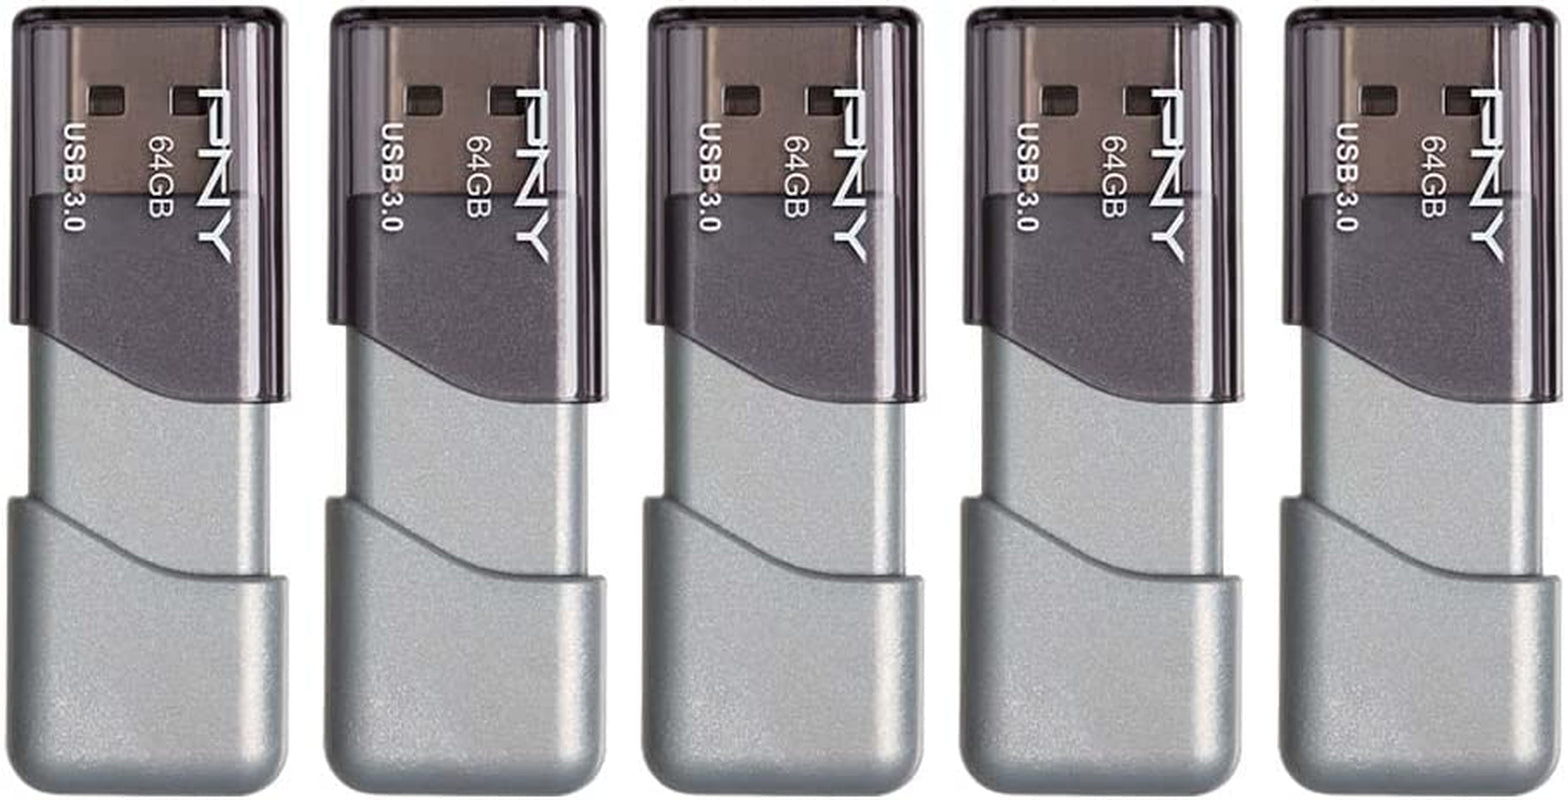 64GB Turbo Attaché 3 USB 3.0 Flash Drive 5-Pack, Silver